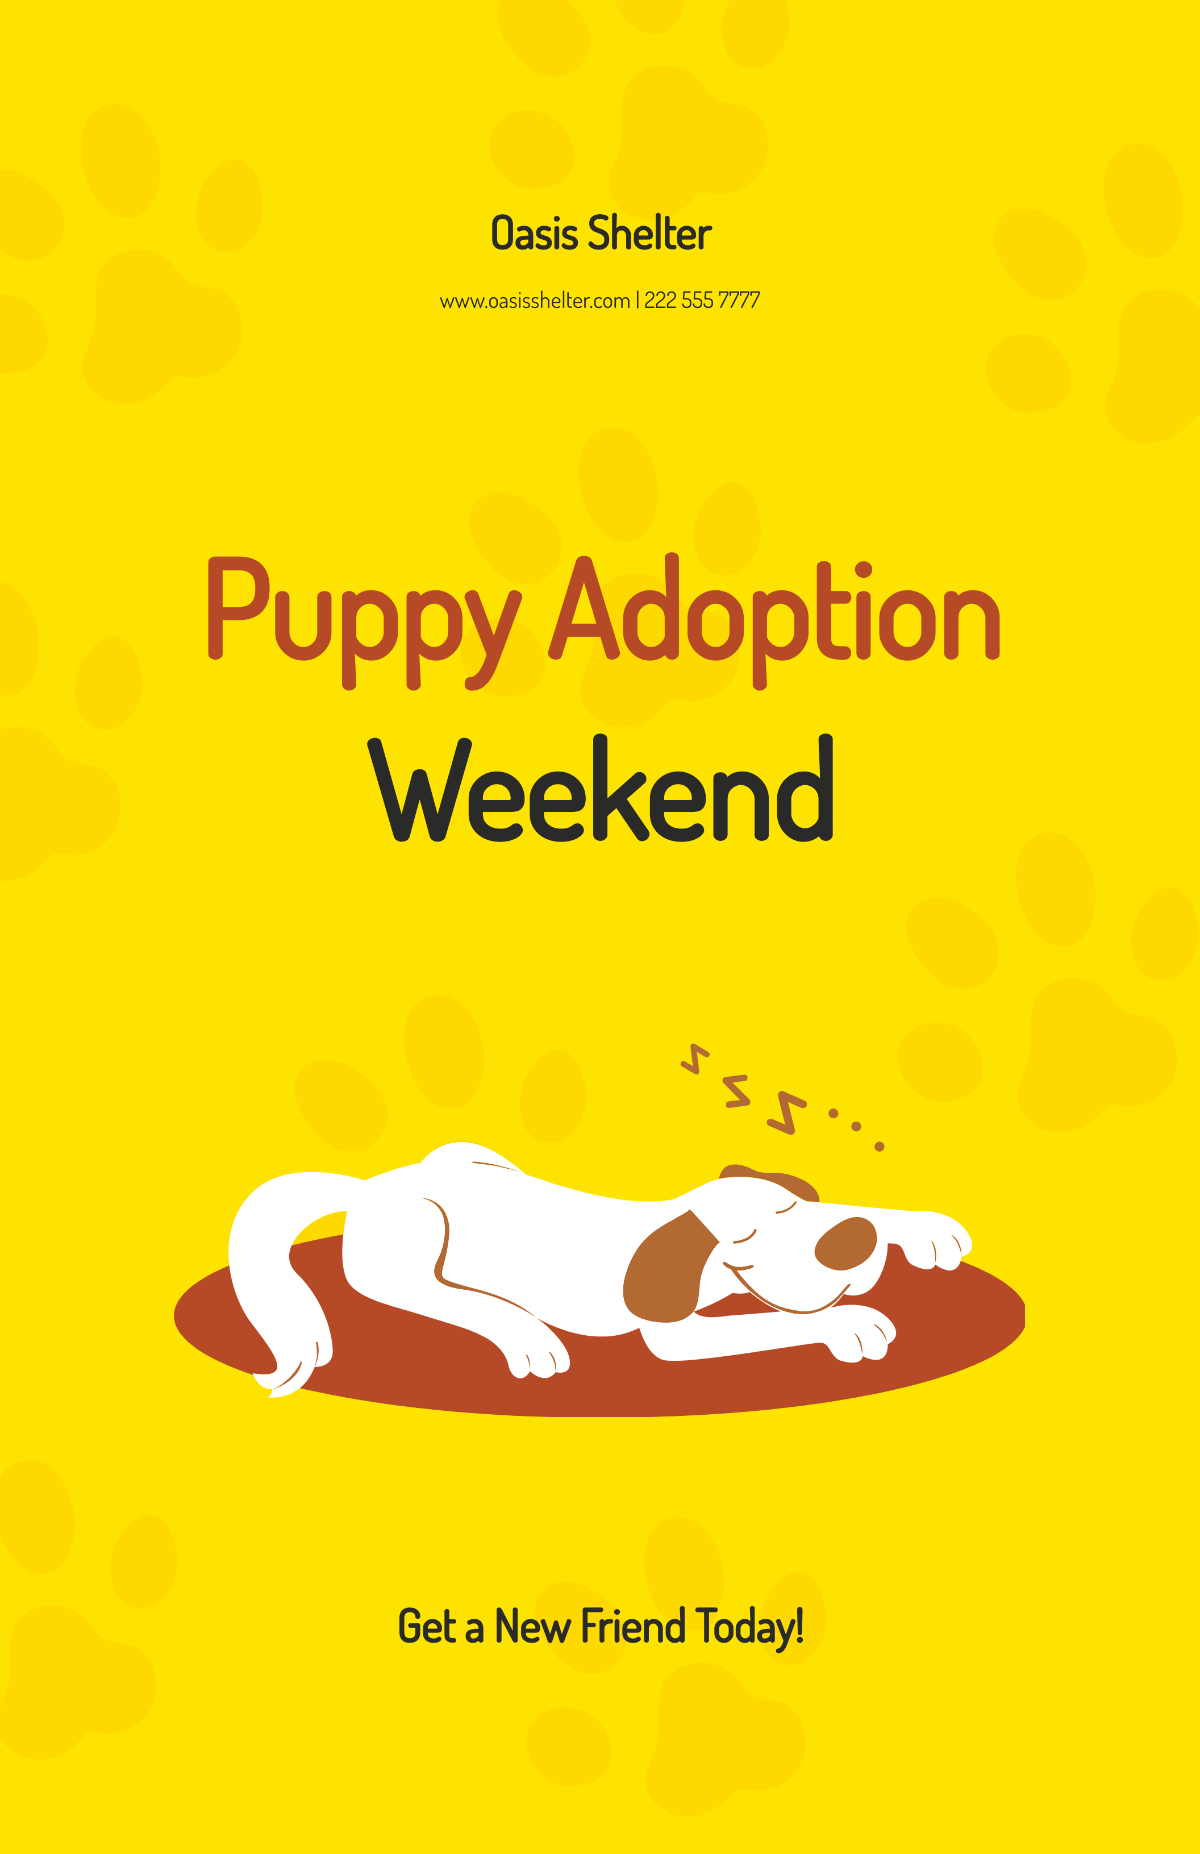 Modern Dog Adoption Poster Template